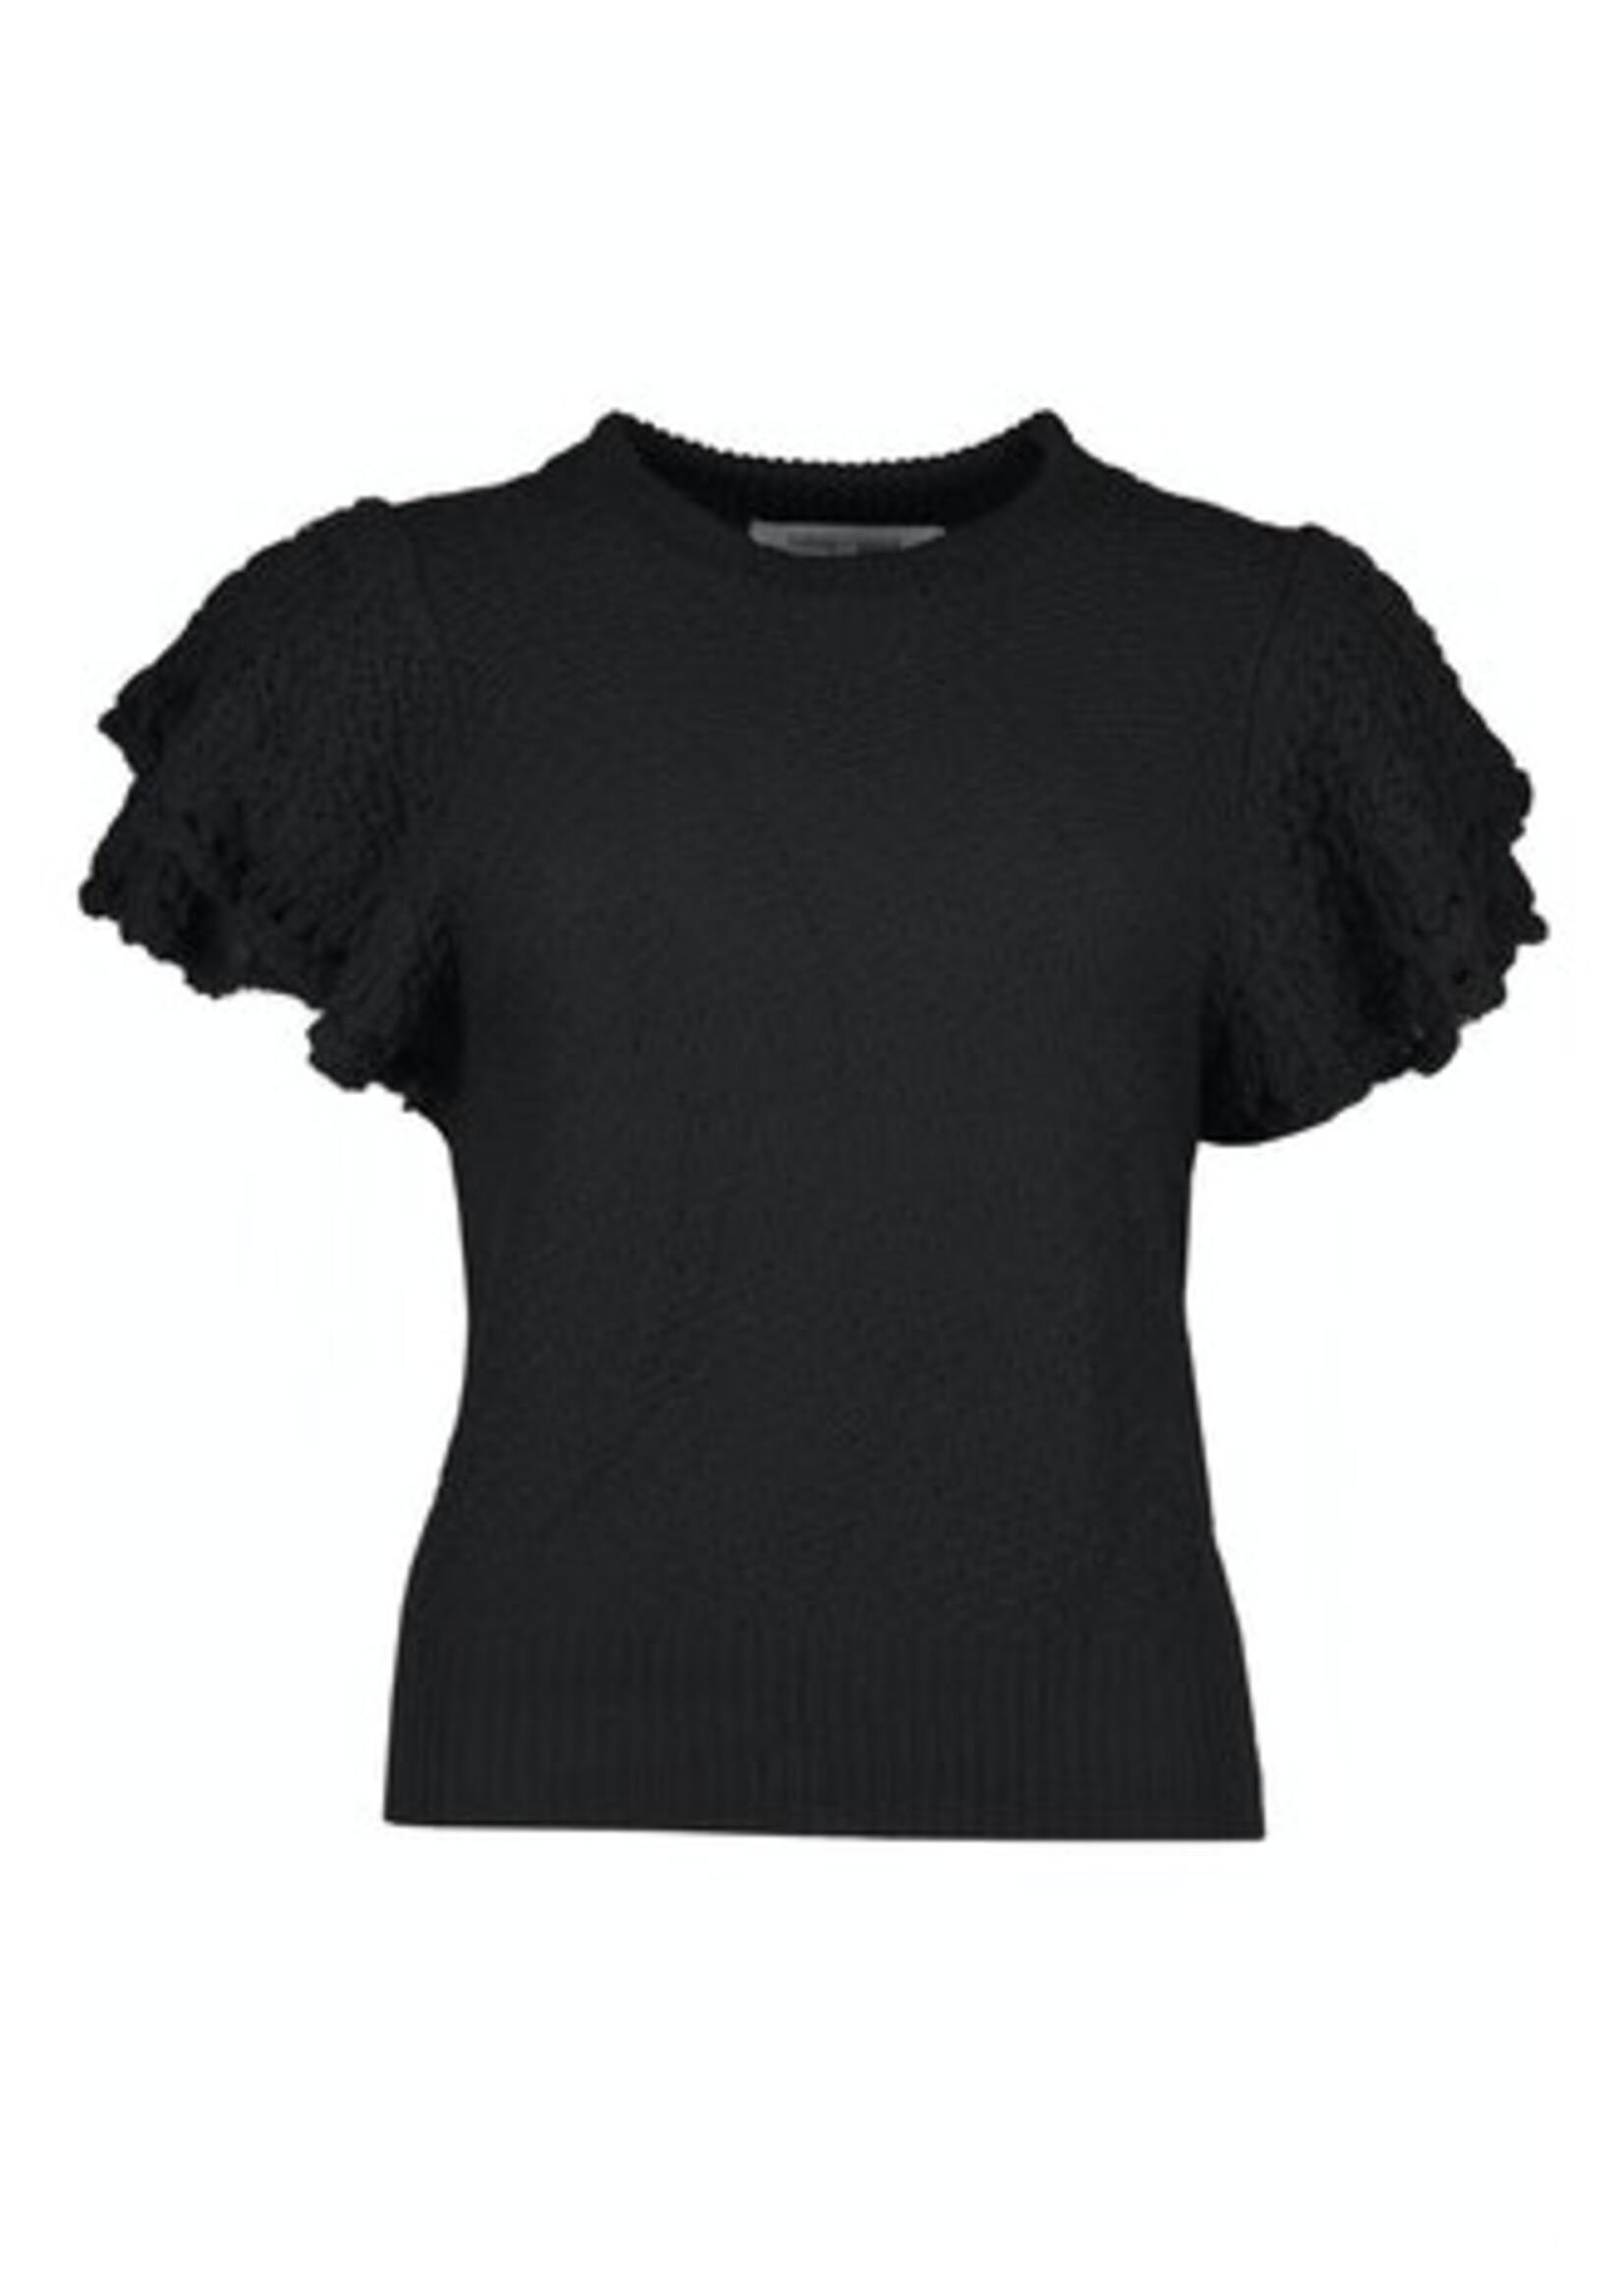 Colette Short Sleeve Sweater Black